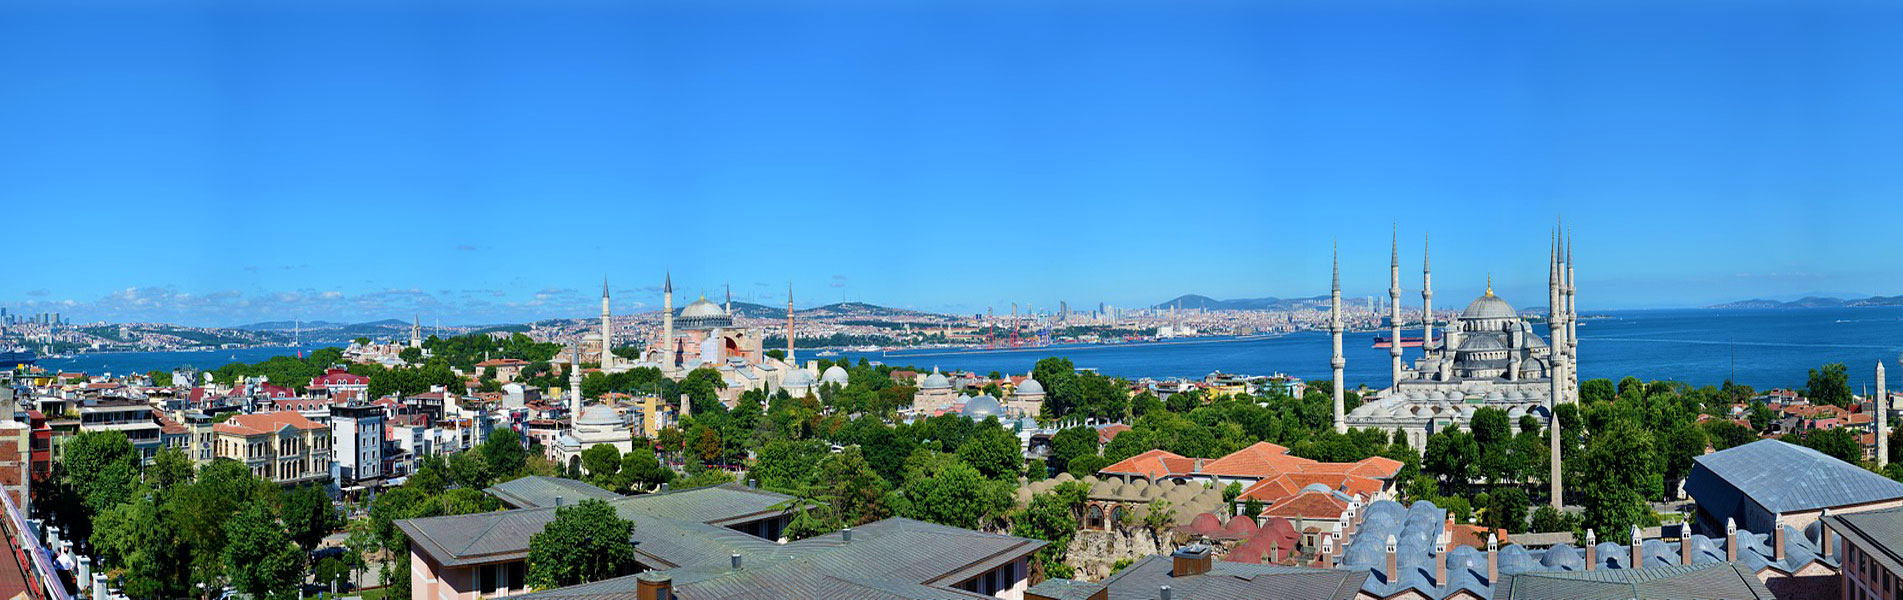 Istanbul Old City, Turkey